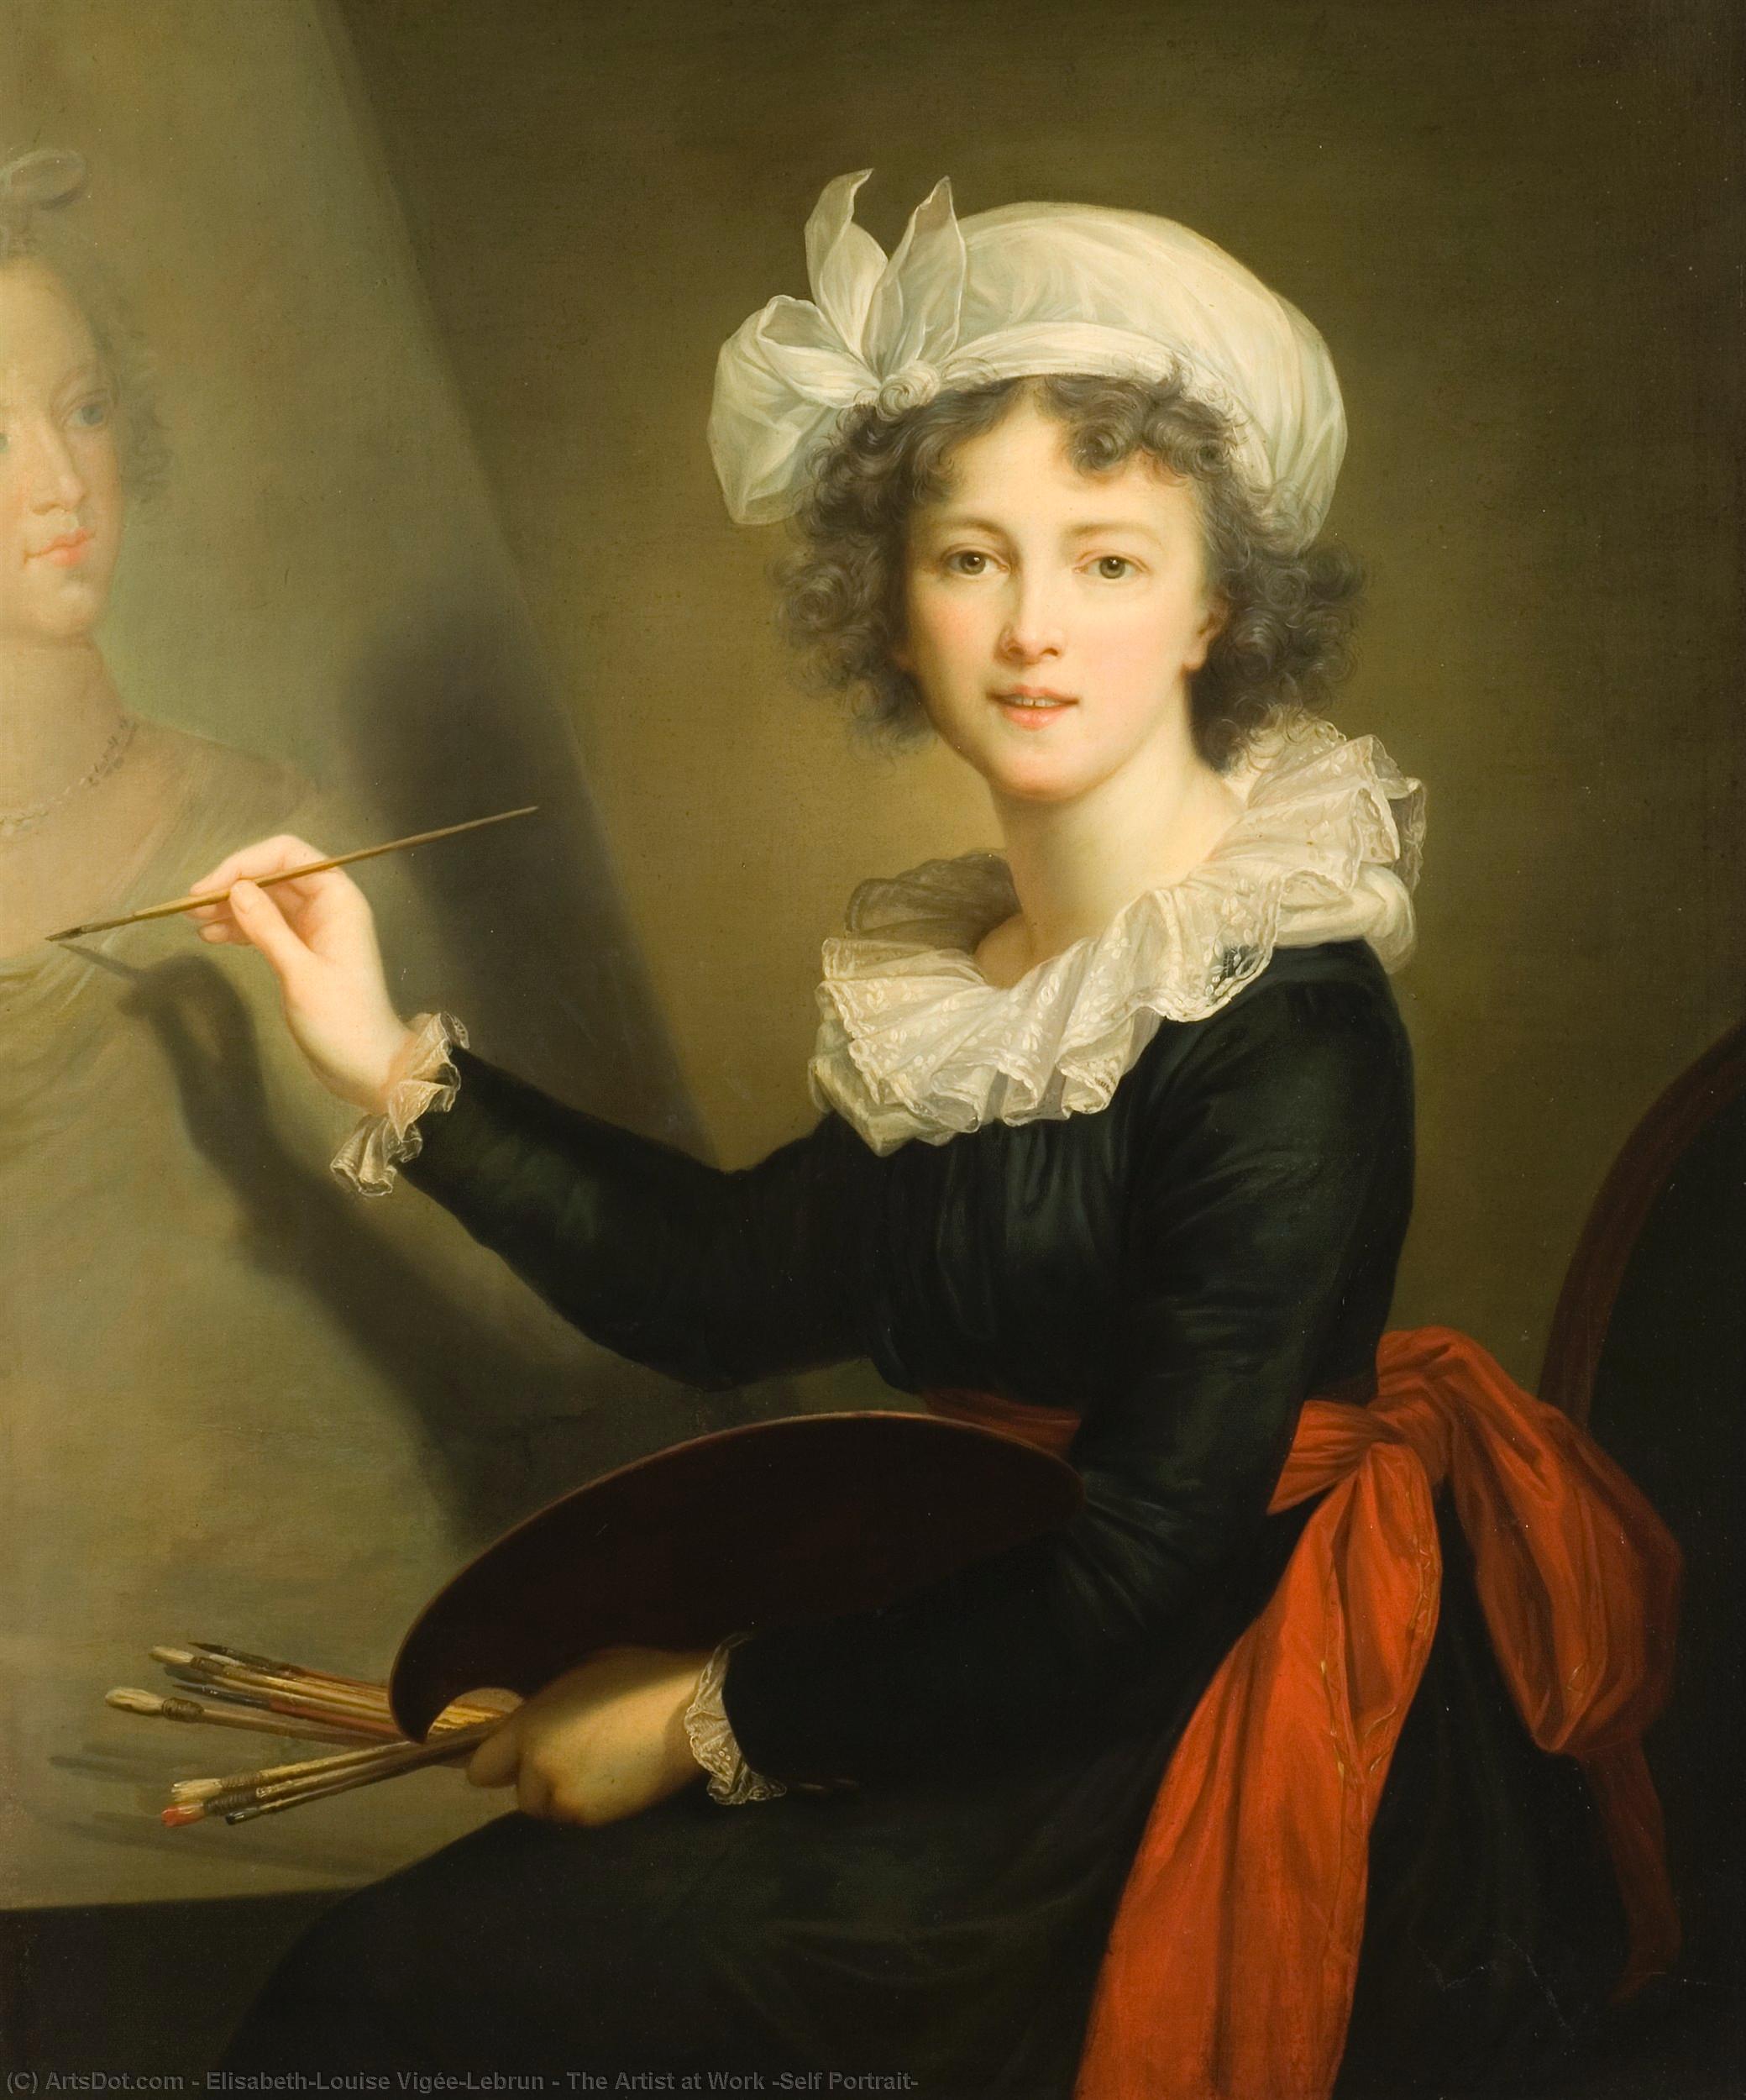 Buy Museum Art Reproductions The Artist at Work (Self Portrait), 1791 by Elisabeth-Louise Vigée-Lebrun | ArtsDot.com